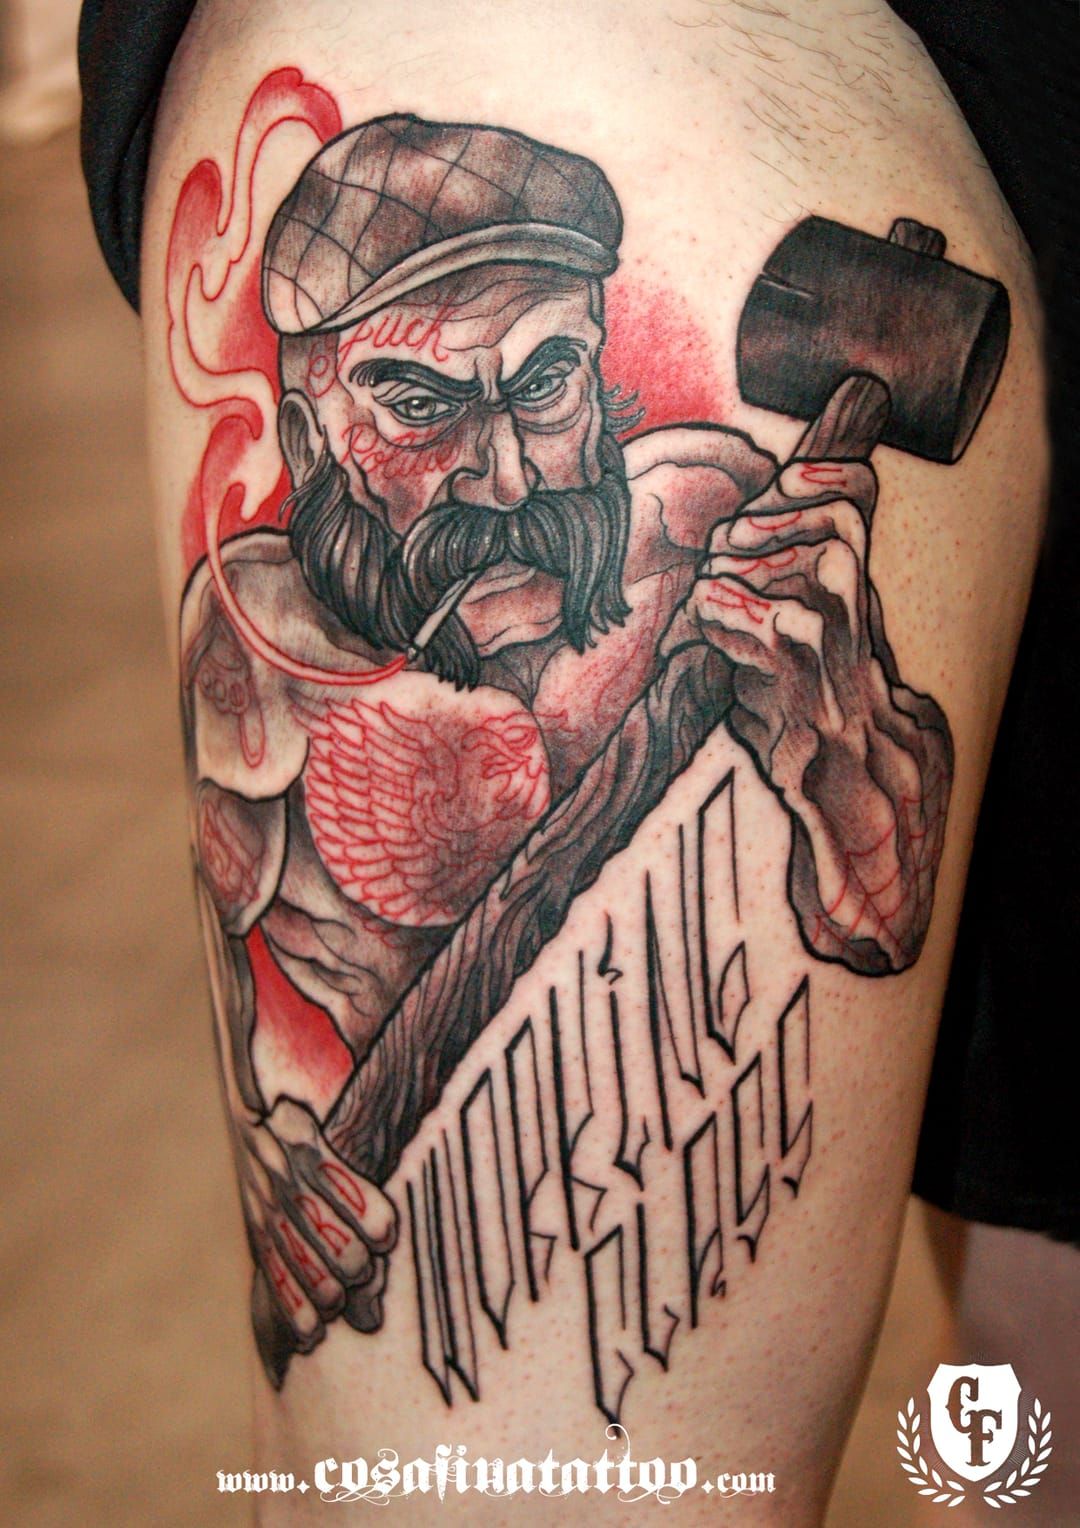 Awesome Tattoo by Cosa Fina Tattoo